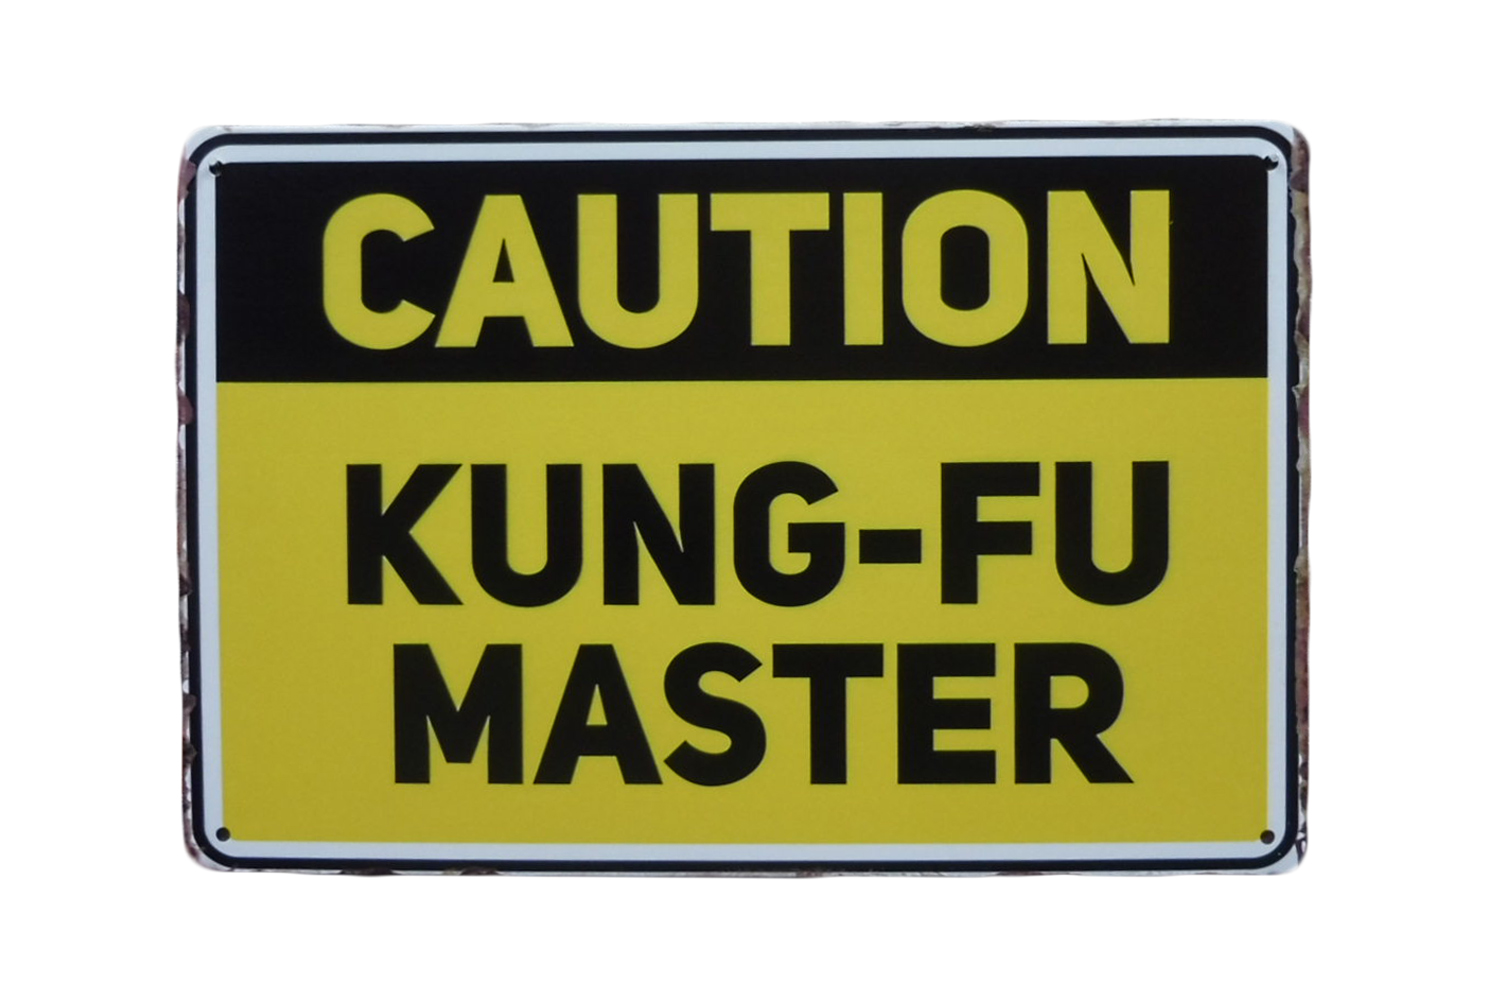 Caution Kungfu Master – Metalen borden